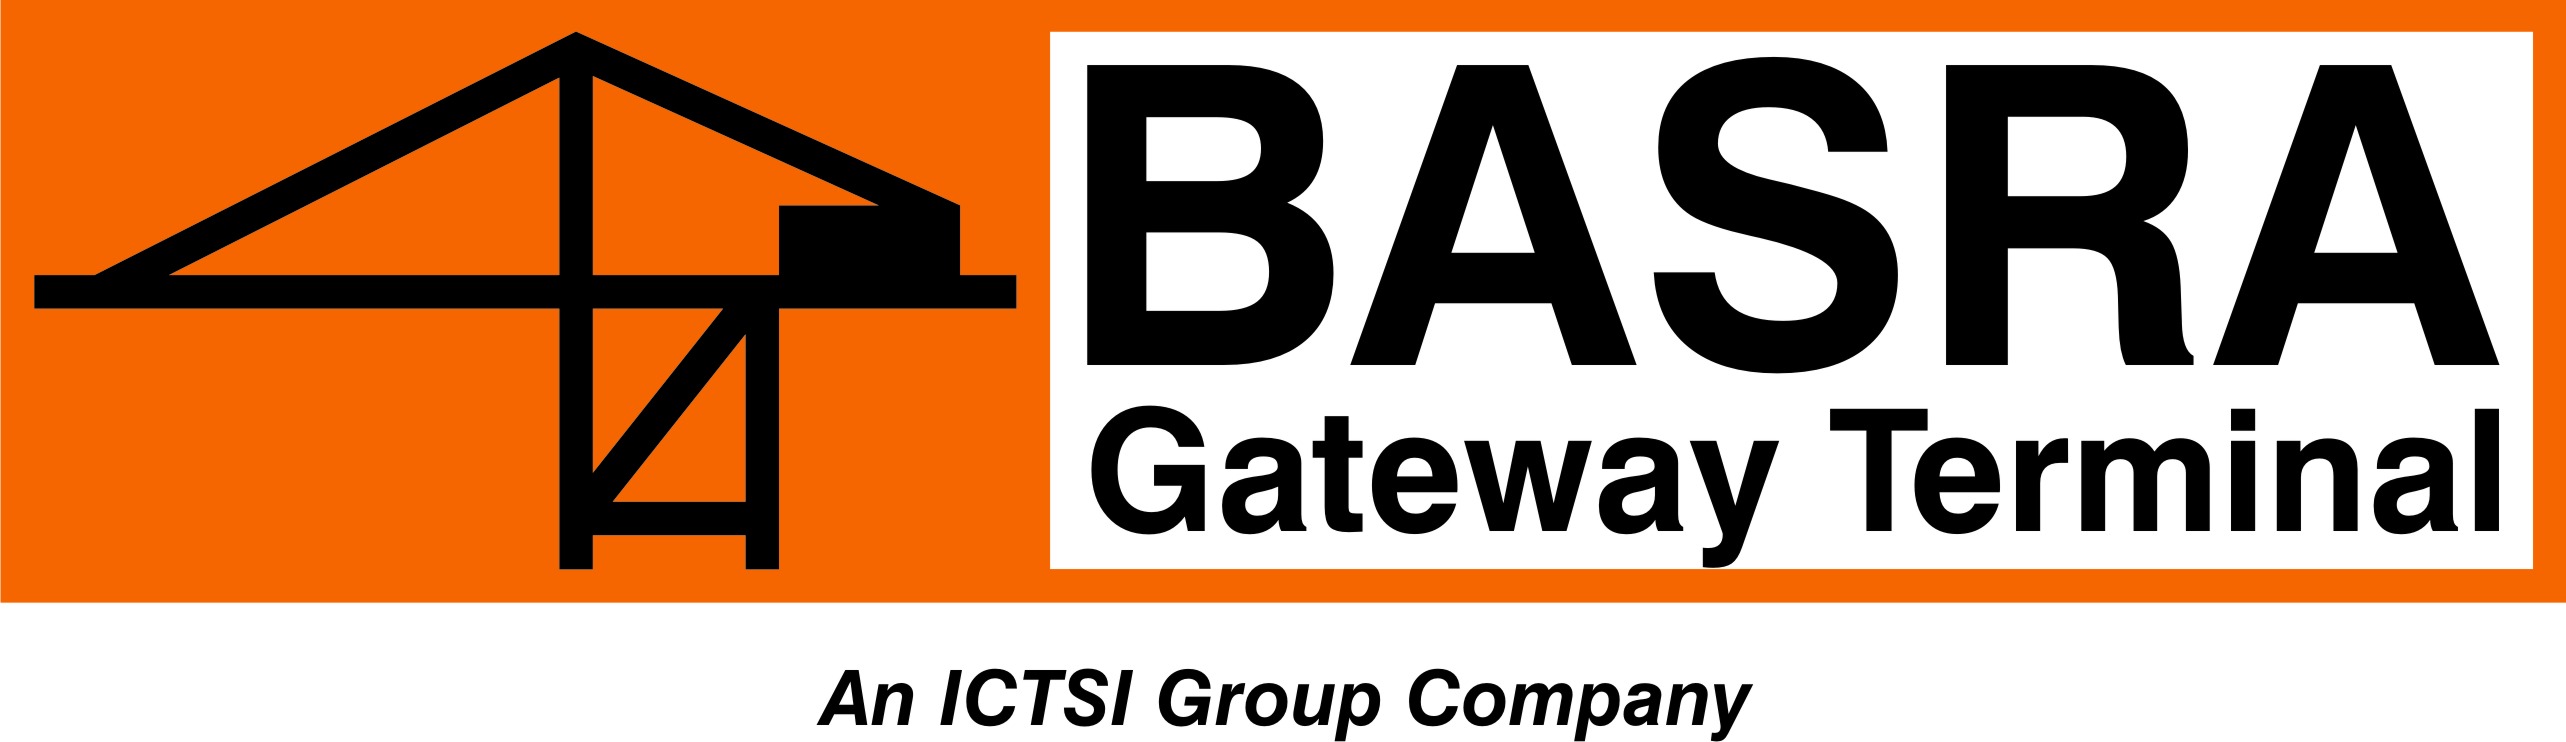 Basra Gateway Terminal (BGT)